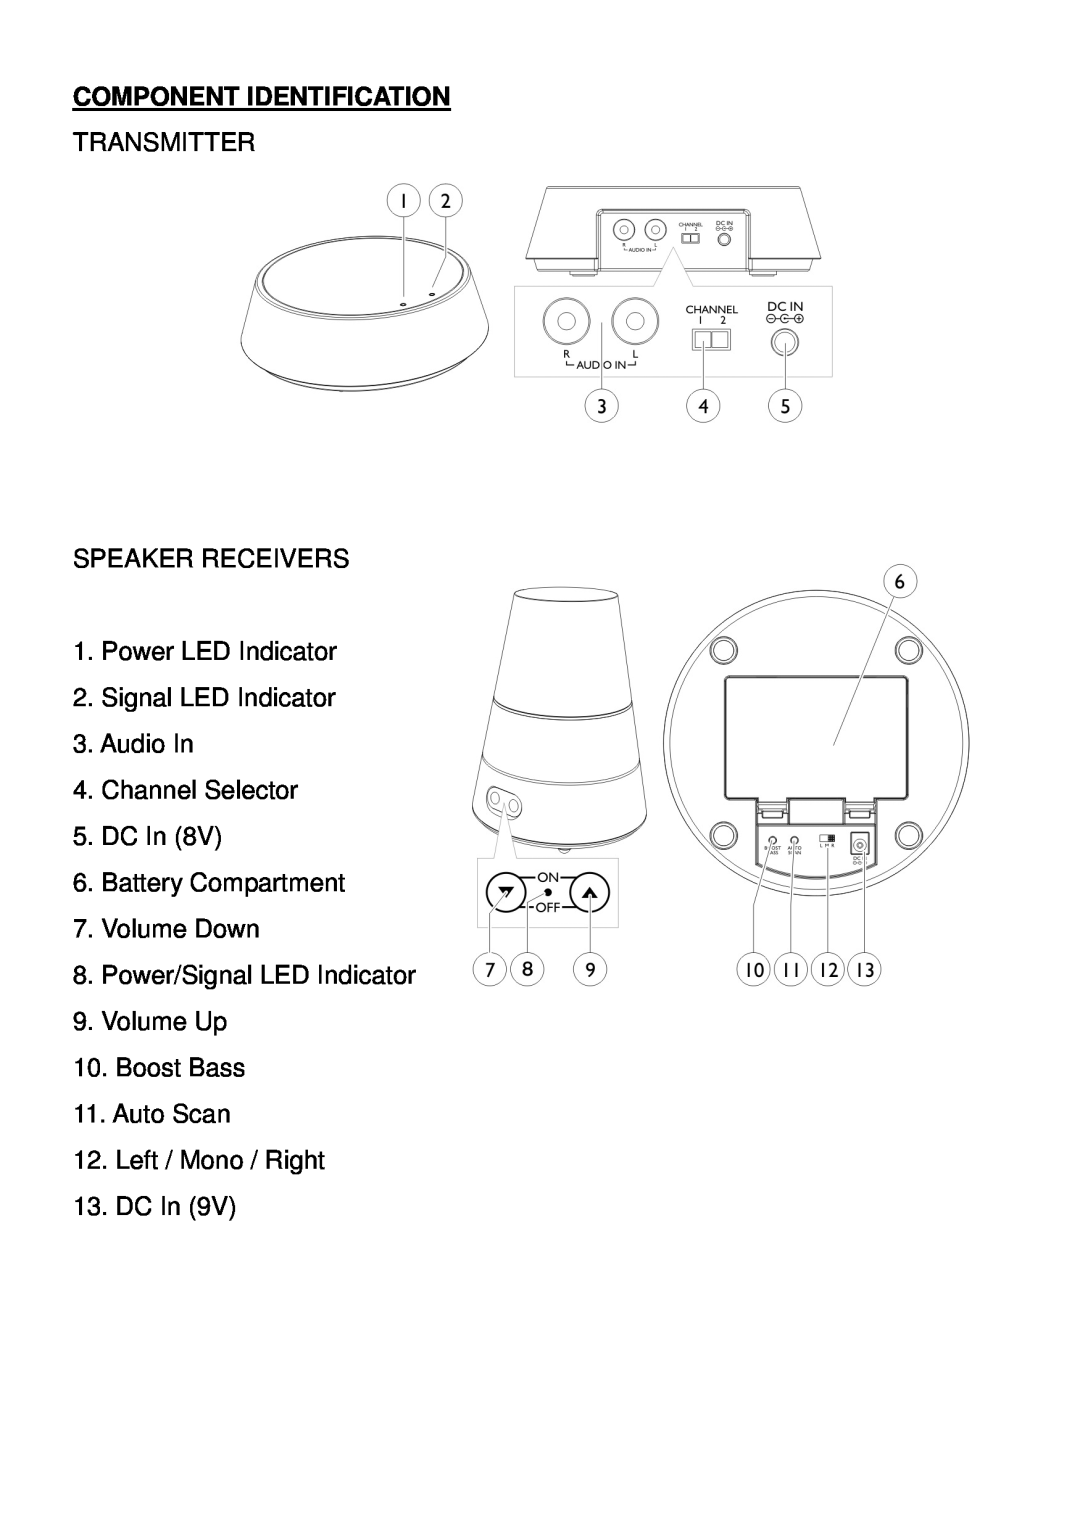 Mark Feldstein & Assoc SP4080 Component Identification, Transmitter Speaker Receivers, Audio In 4.Channel Selector 5.DC In 